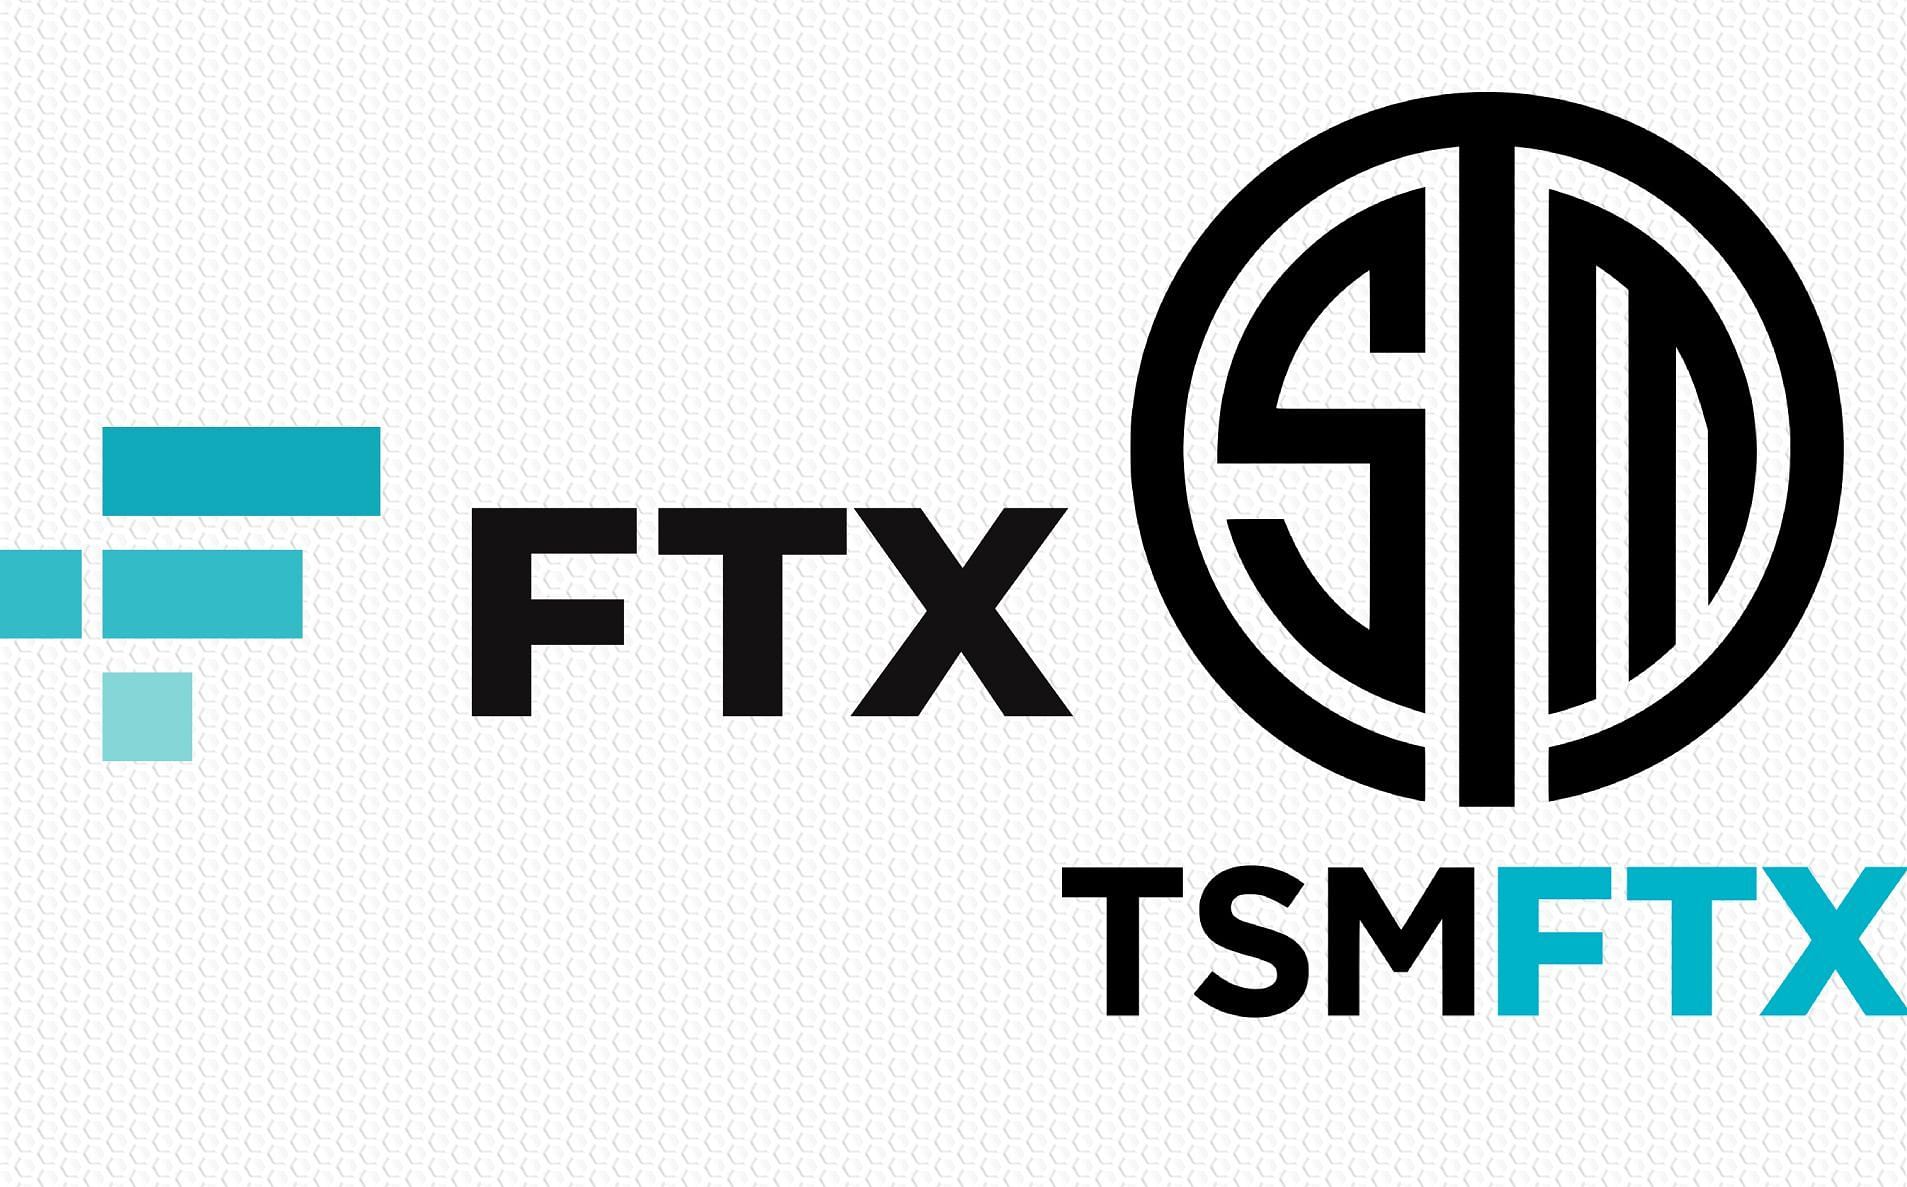 TSM releases a statement after title sponsor FTX files for bankruptcy on November 13, 2022 (Image via Sportskeeda)